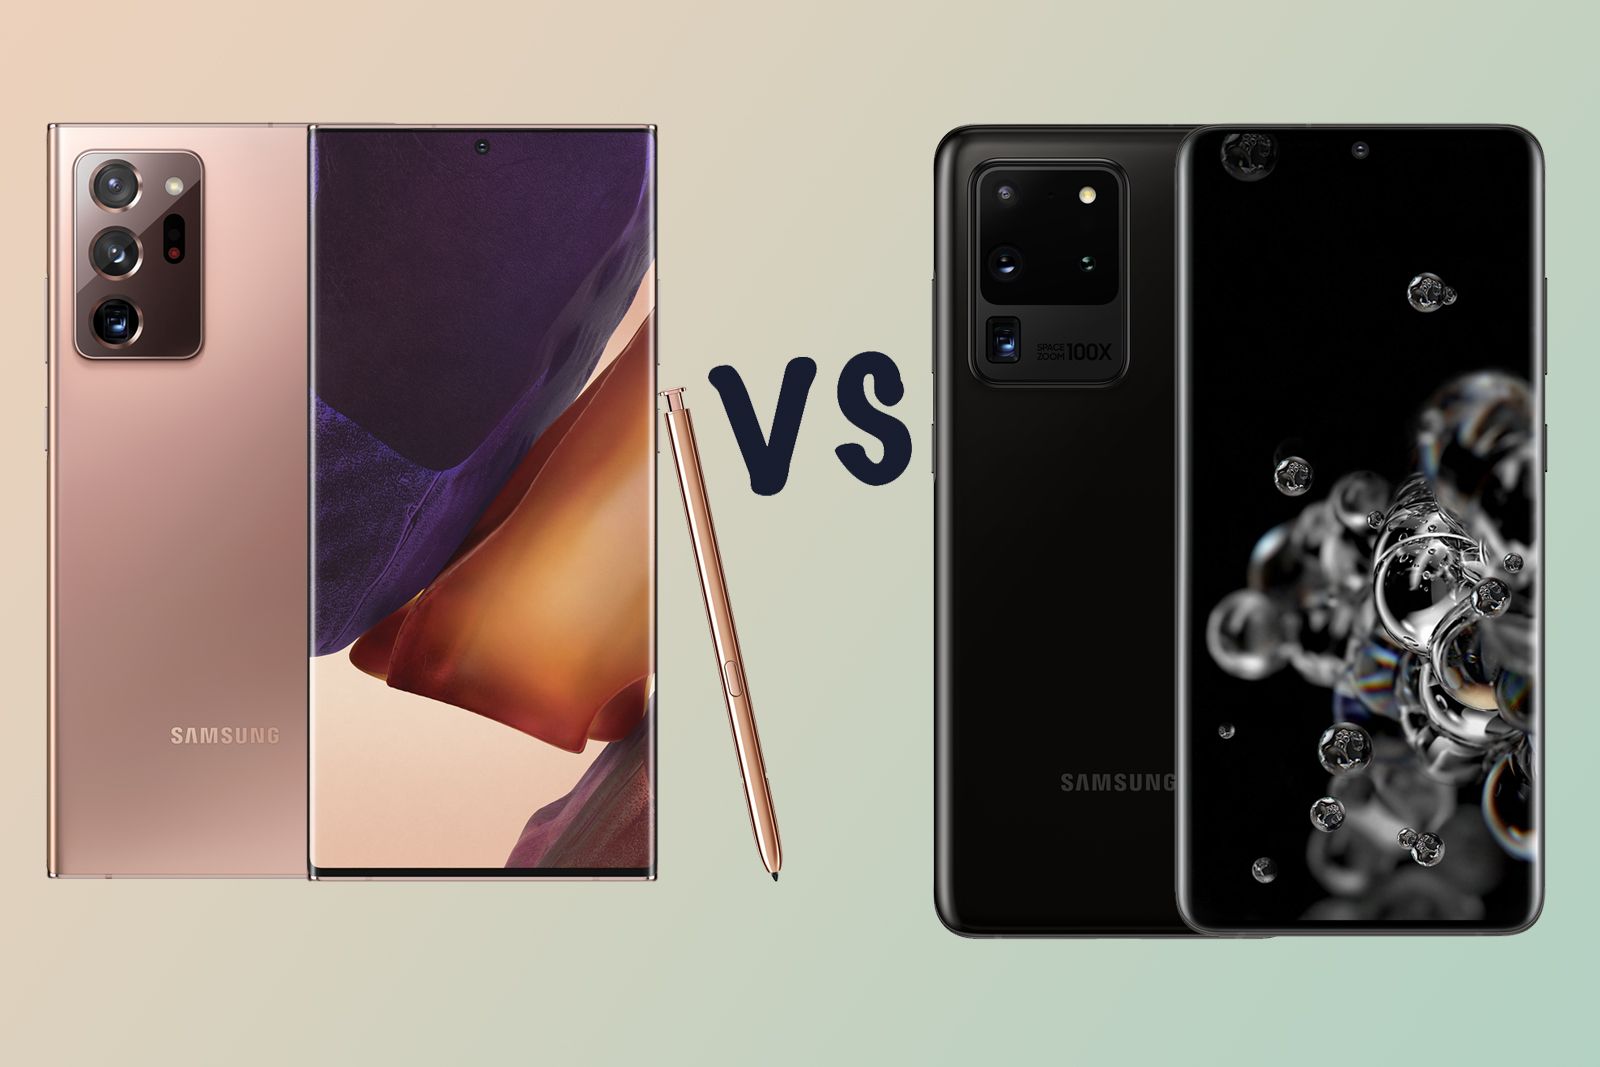 Galaxy Note 20 Ultra vs S20 Ultra vs S20+ differences